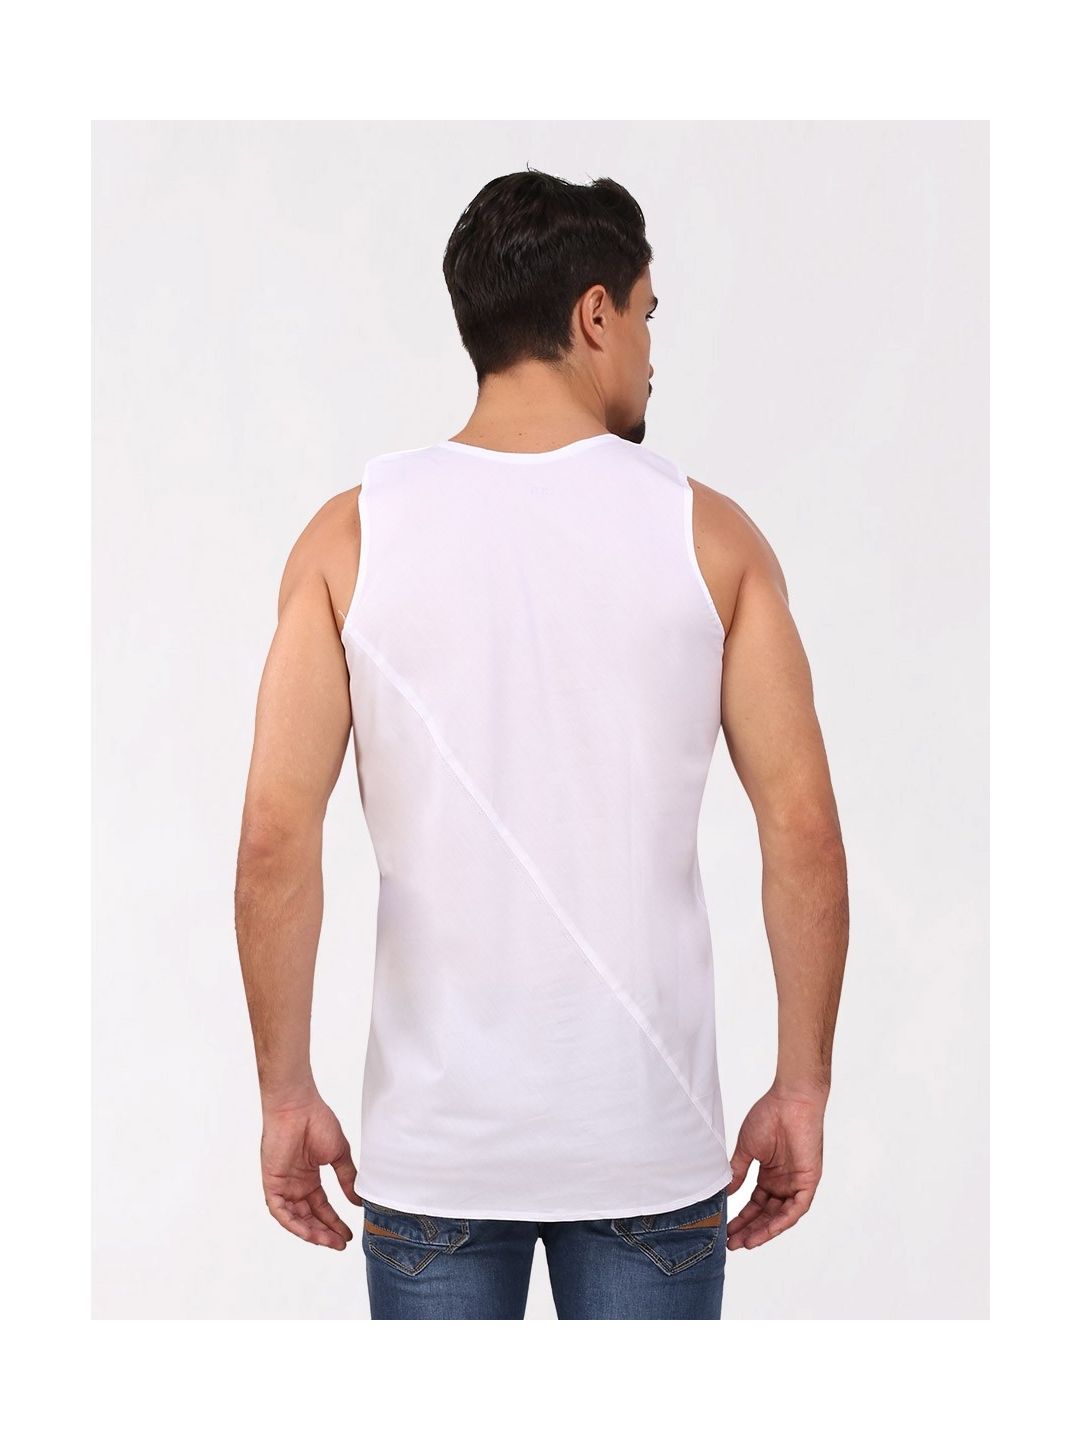 White Cotton Travel Vest (Sleeveless)